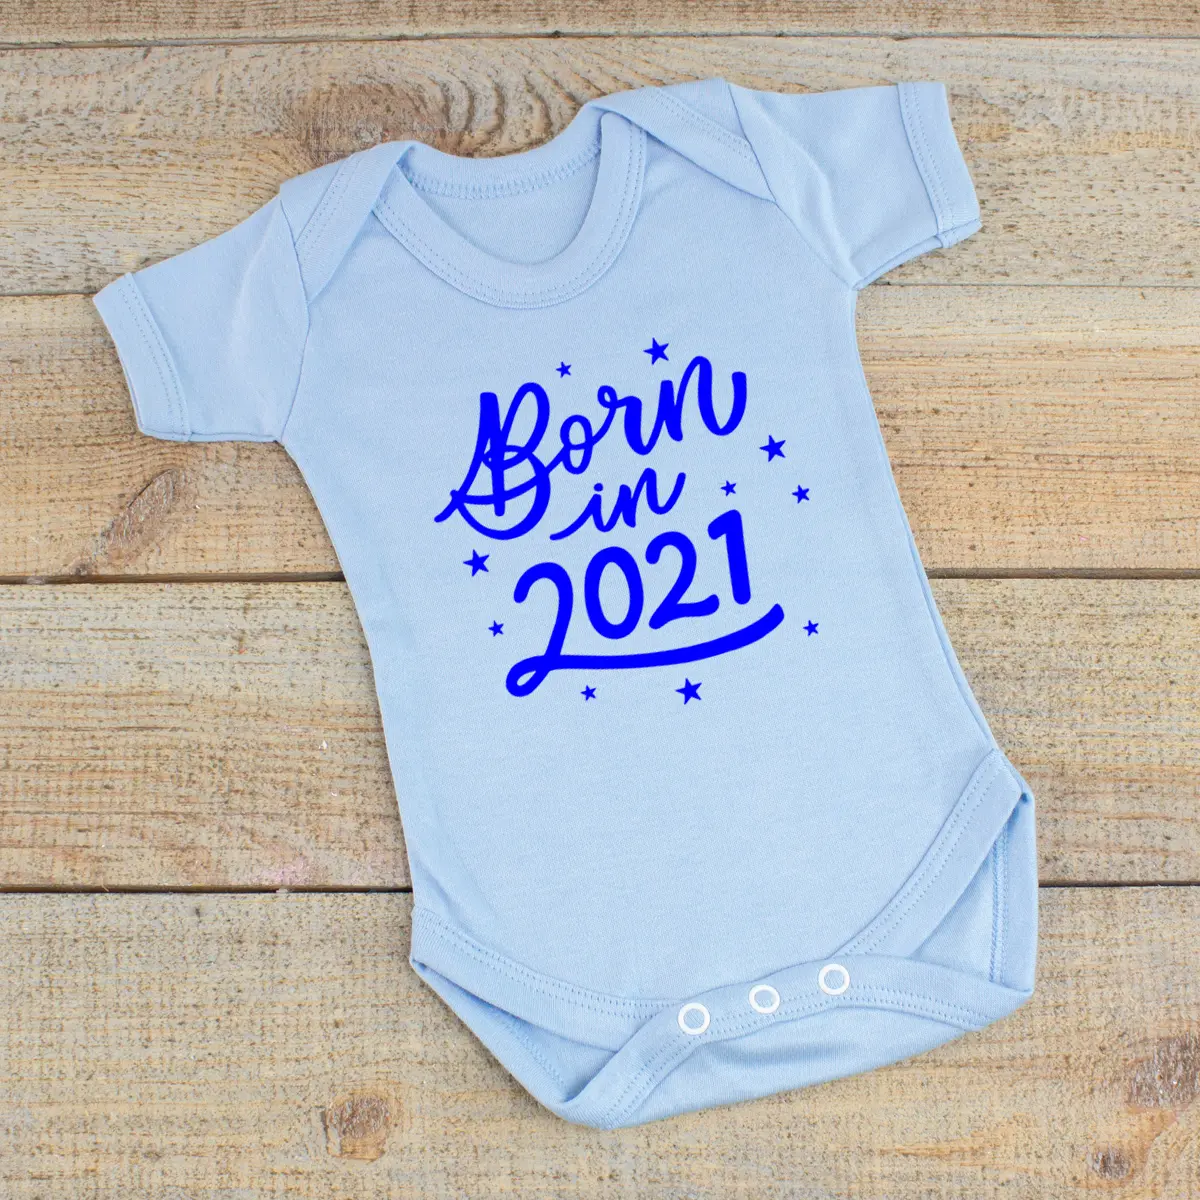 Baby Boy Born in 2021 Clothes